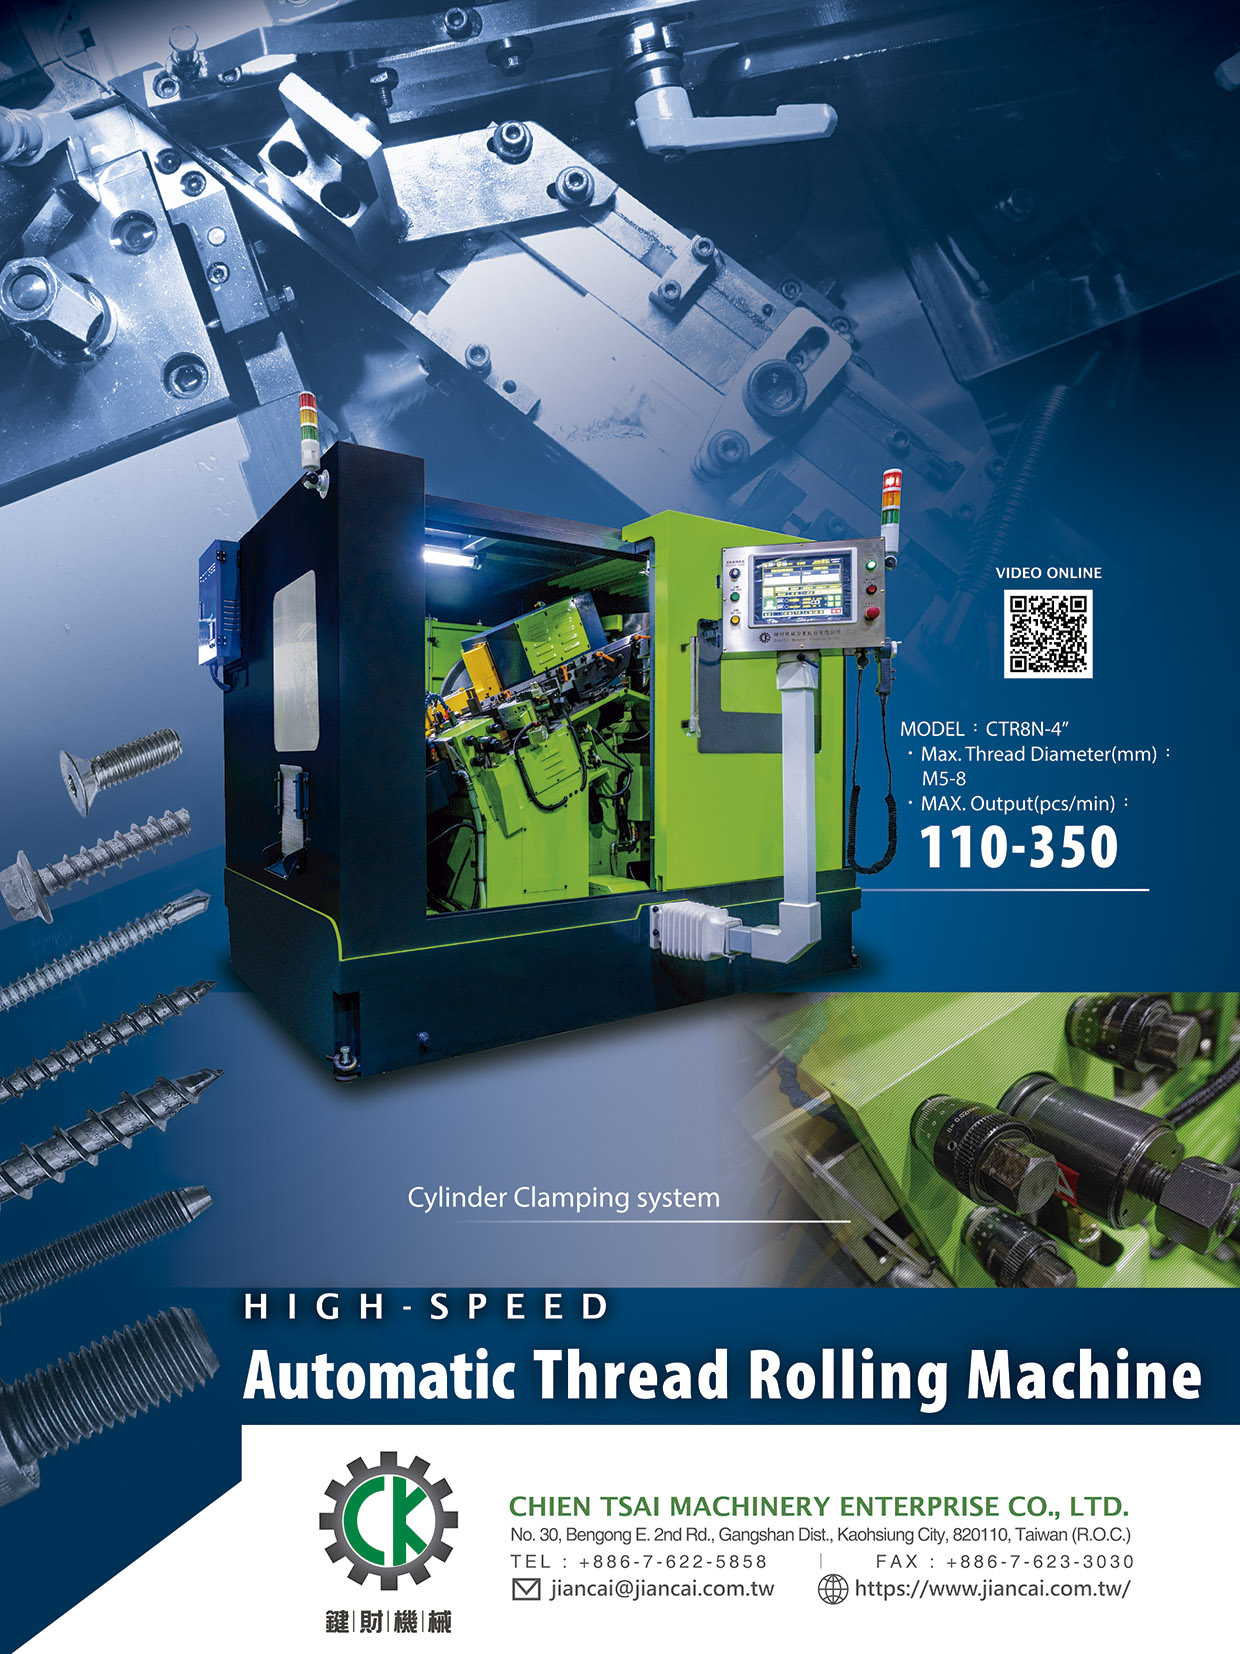 CHIEN TSAI MACHINERY ENTERPRISE CO., LTD. , High-Speed Automatic Thread Rolling Machine